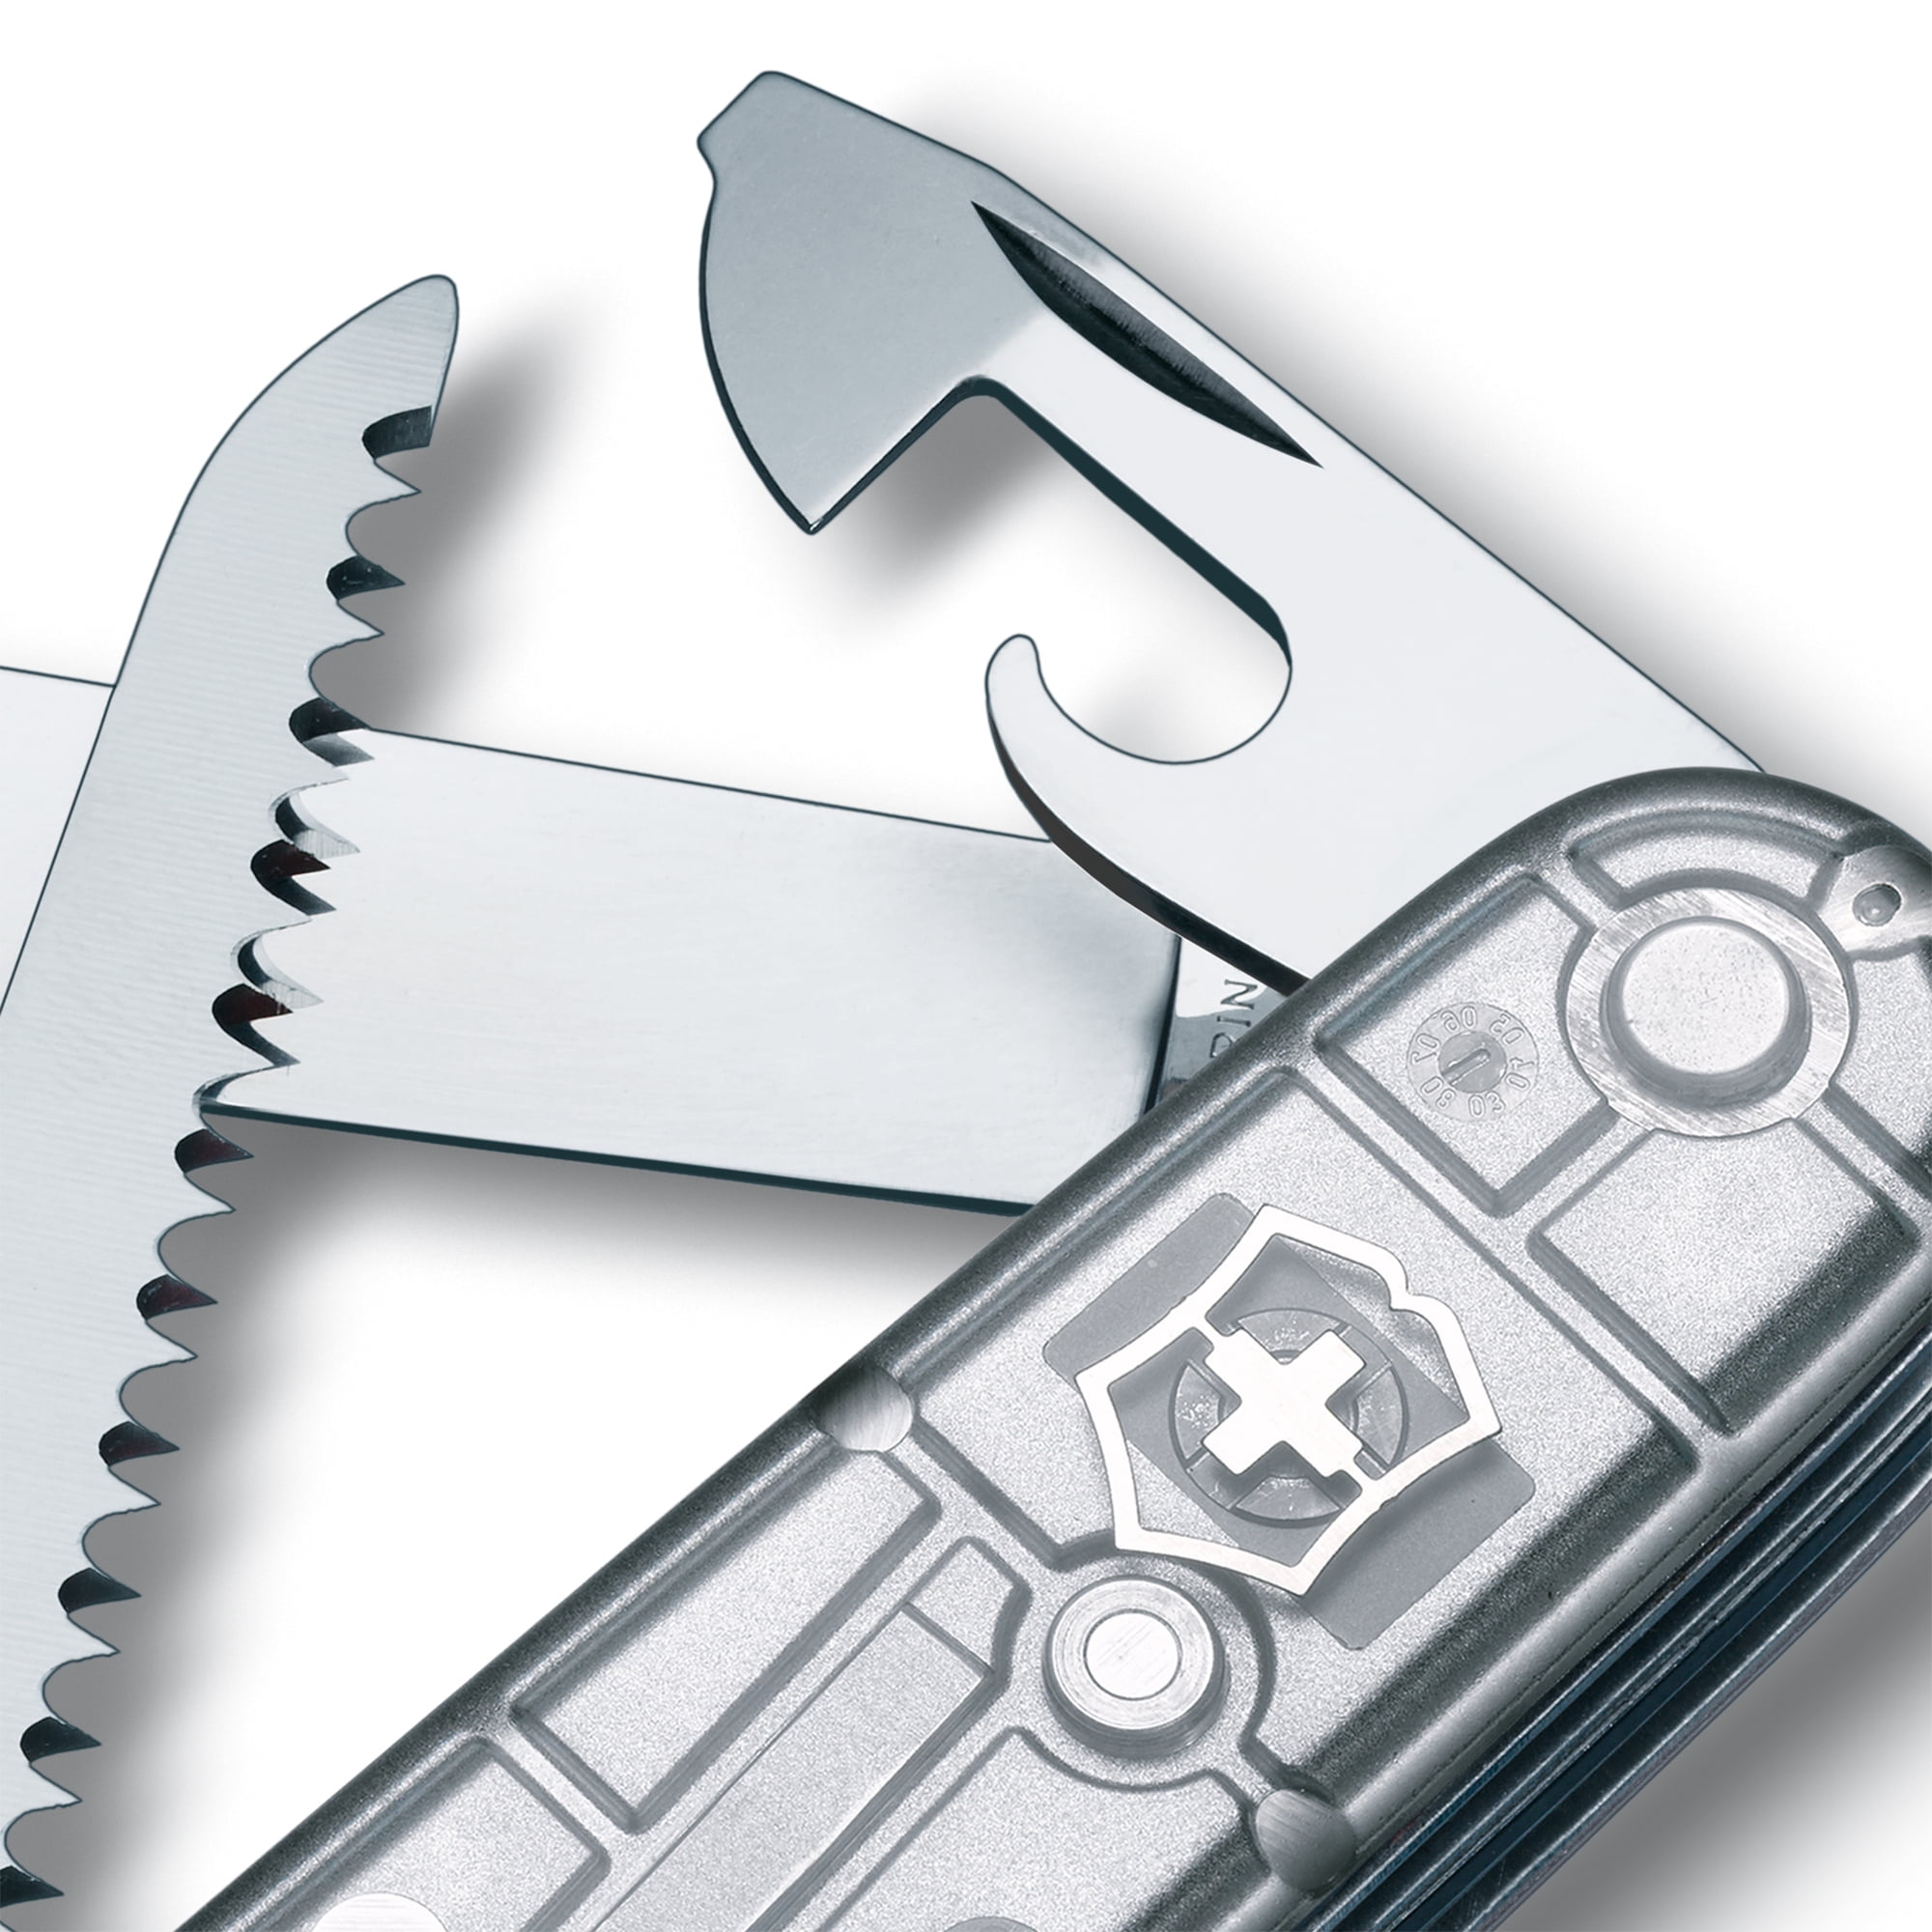 ➡️ Test And Review: Victorinox Huntsman Pocket Knife